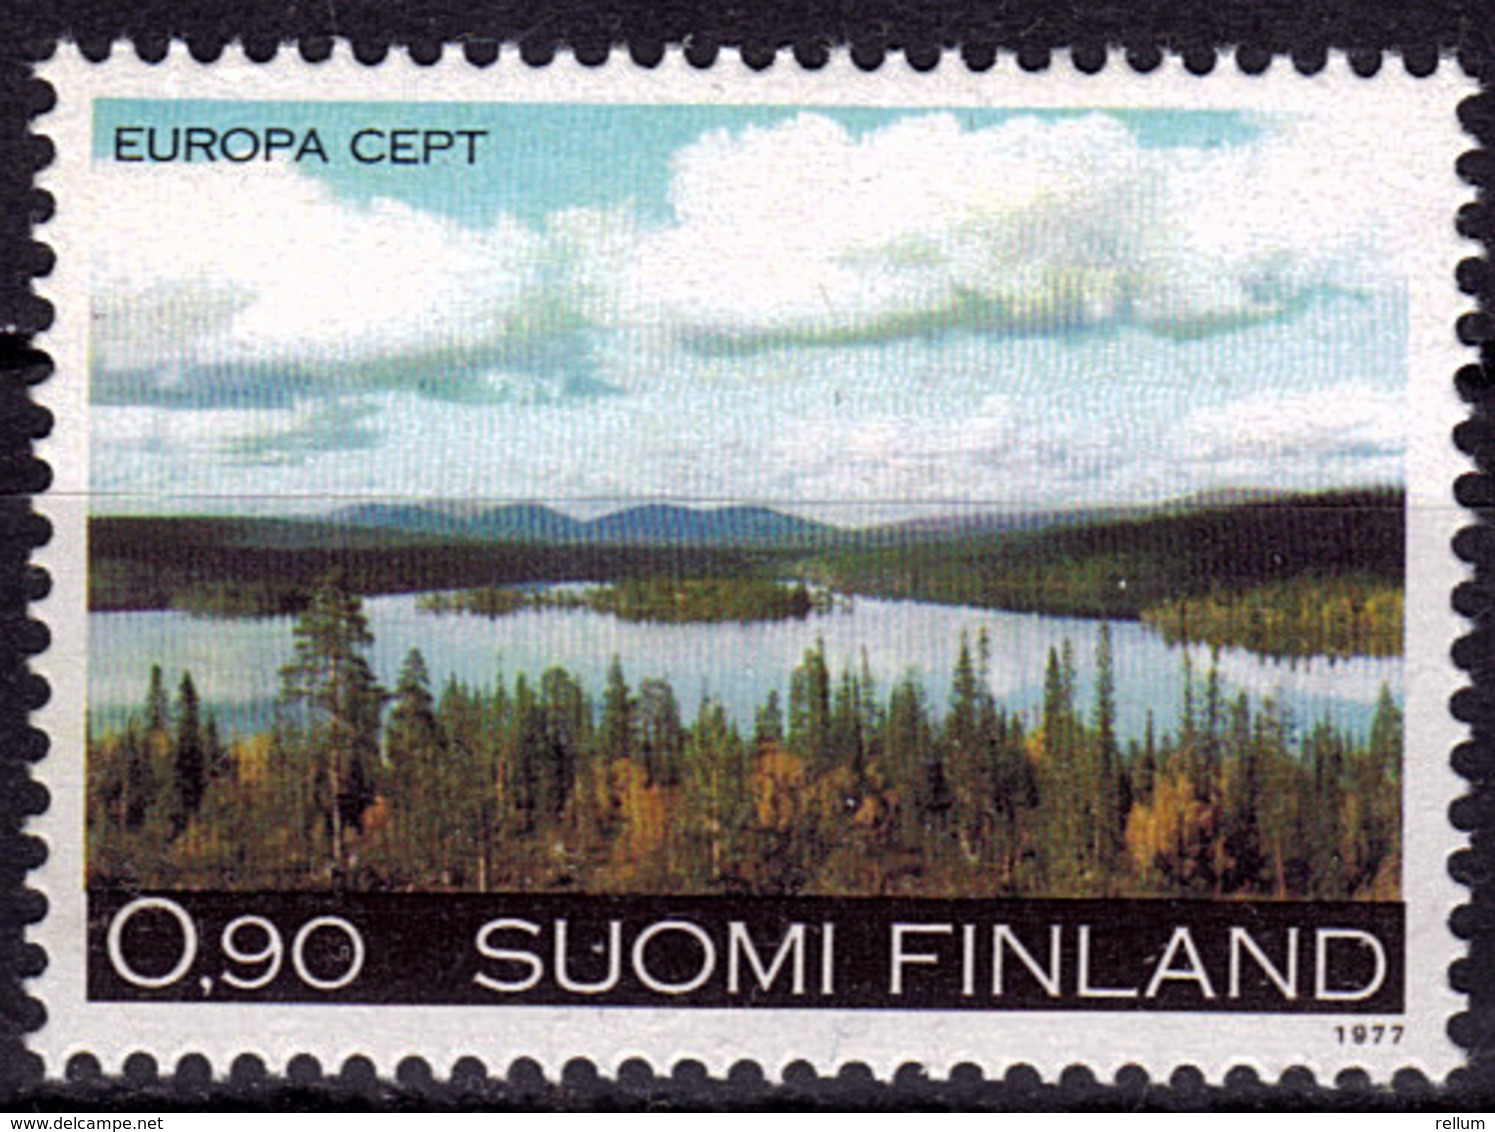 Finlande - Europa CEPT 1977 - Yvert Nr. 773 - Michel Nr. 808  ** - 1977